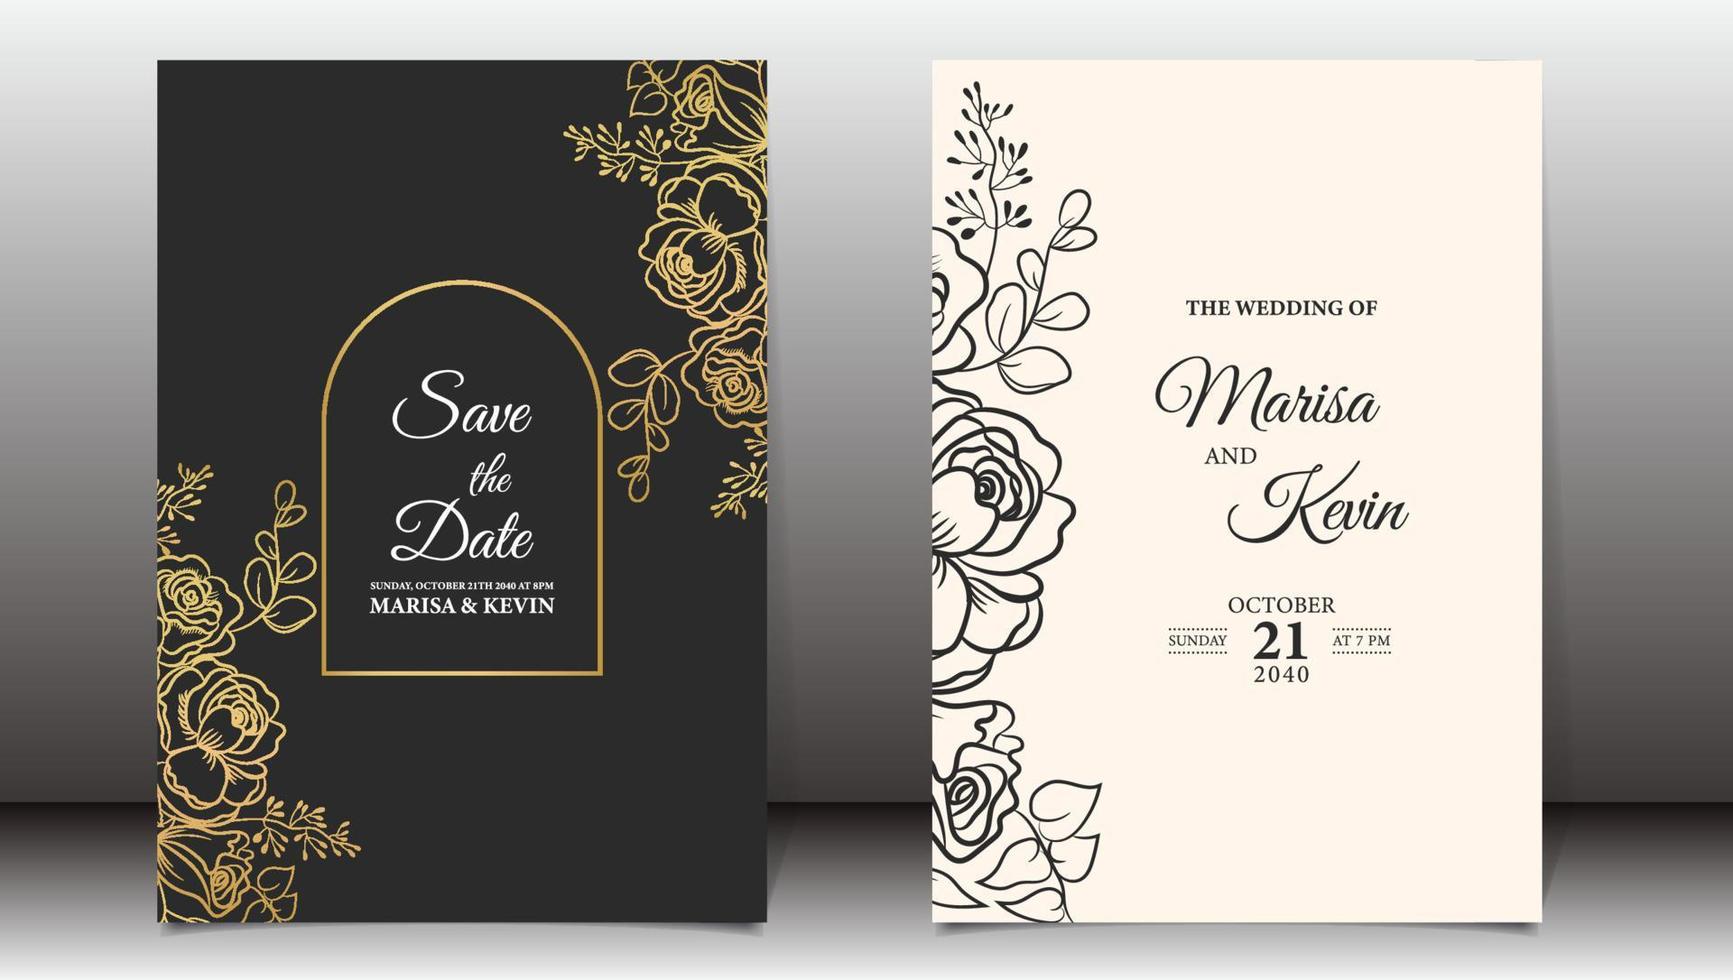 Luxury wedding invitation with gold line style minimalist floral premium vector